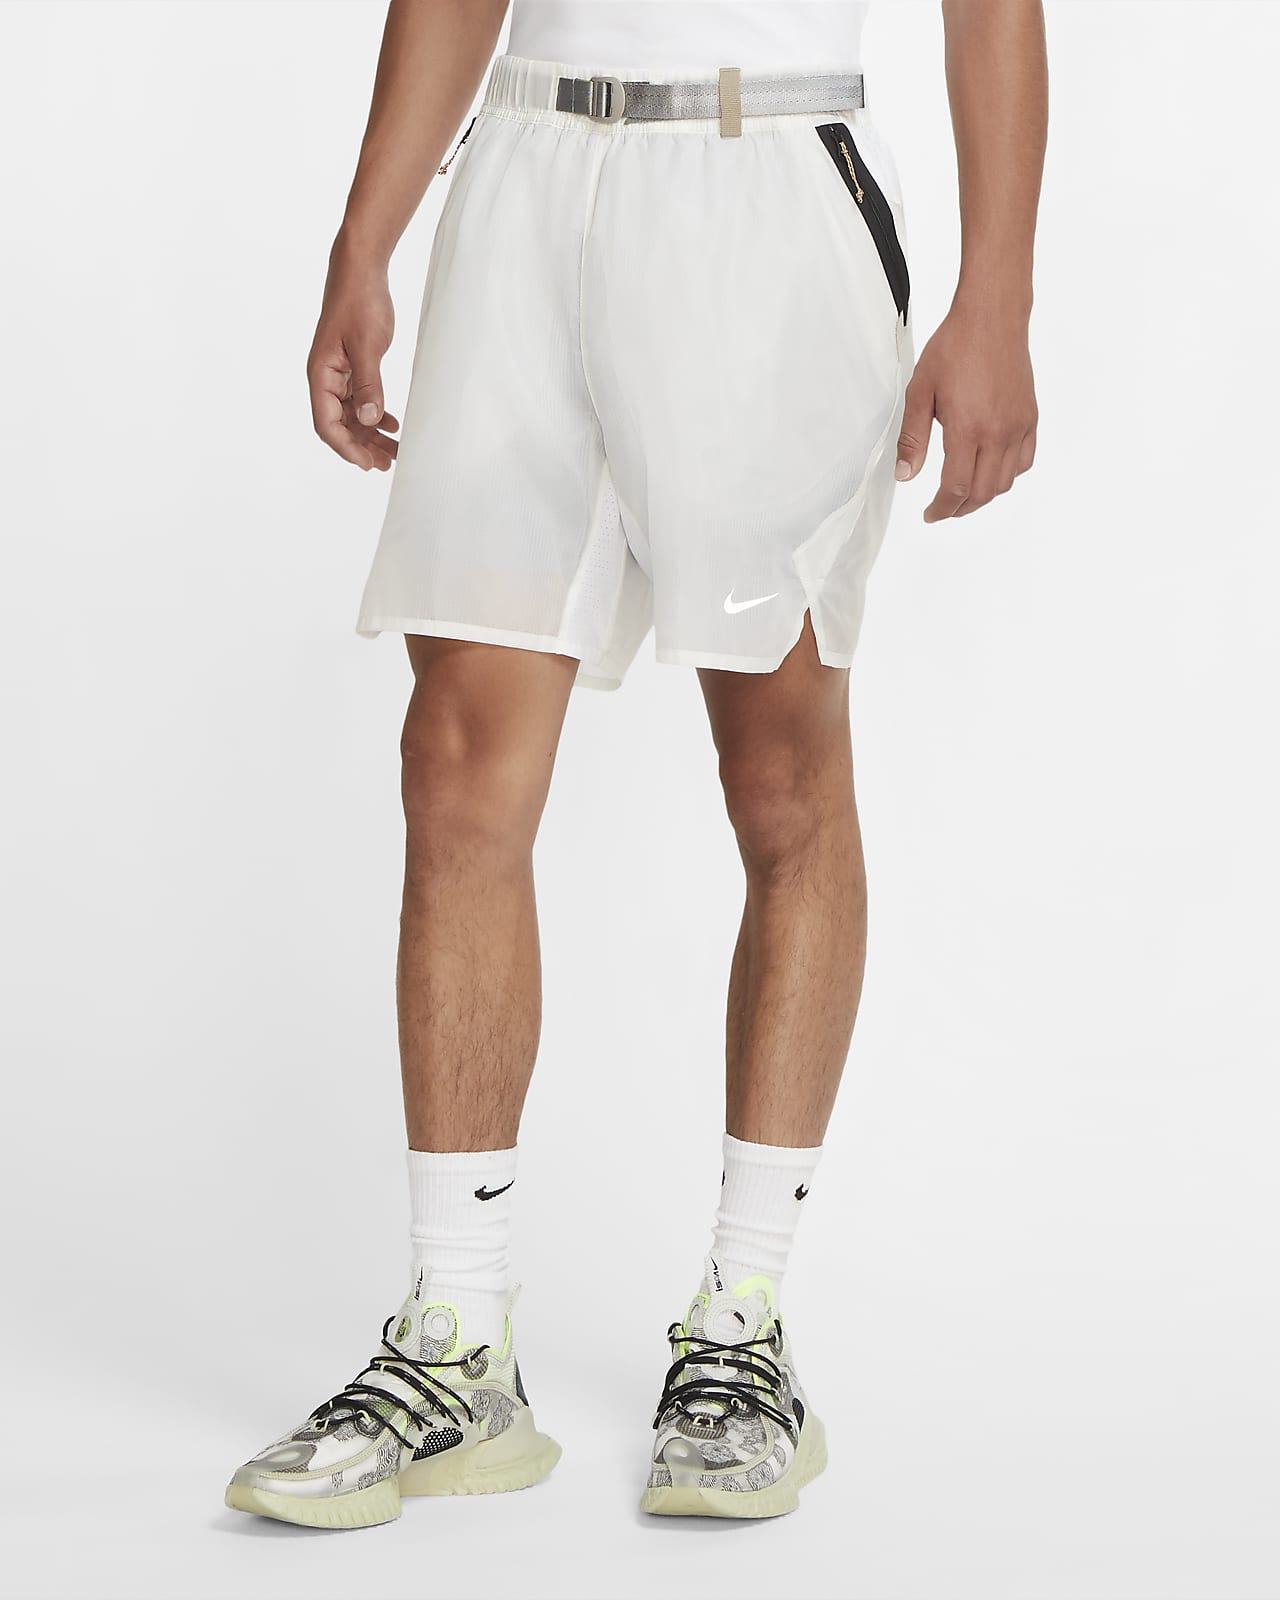 Nike ISPA Men's Shorts. Nike SA